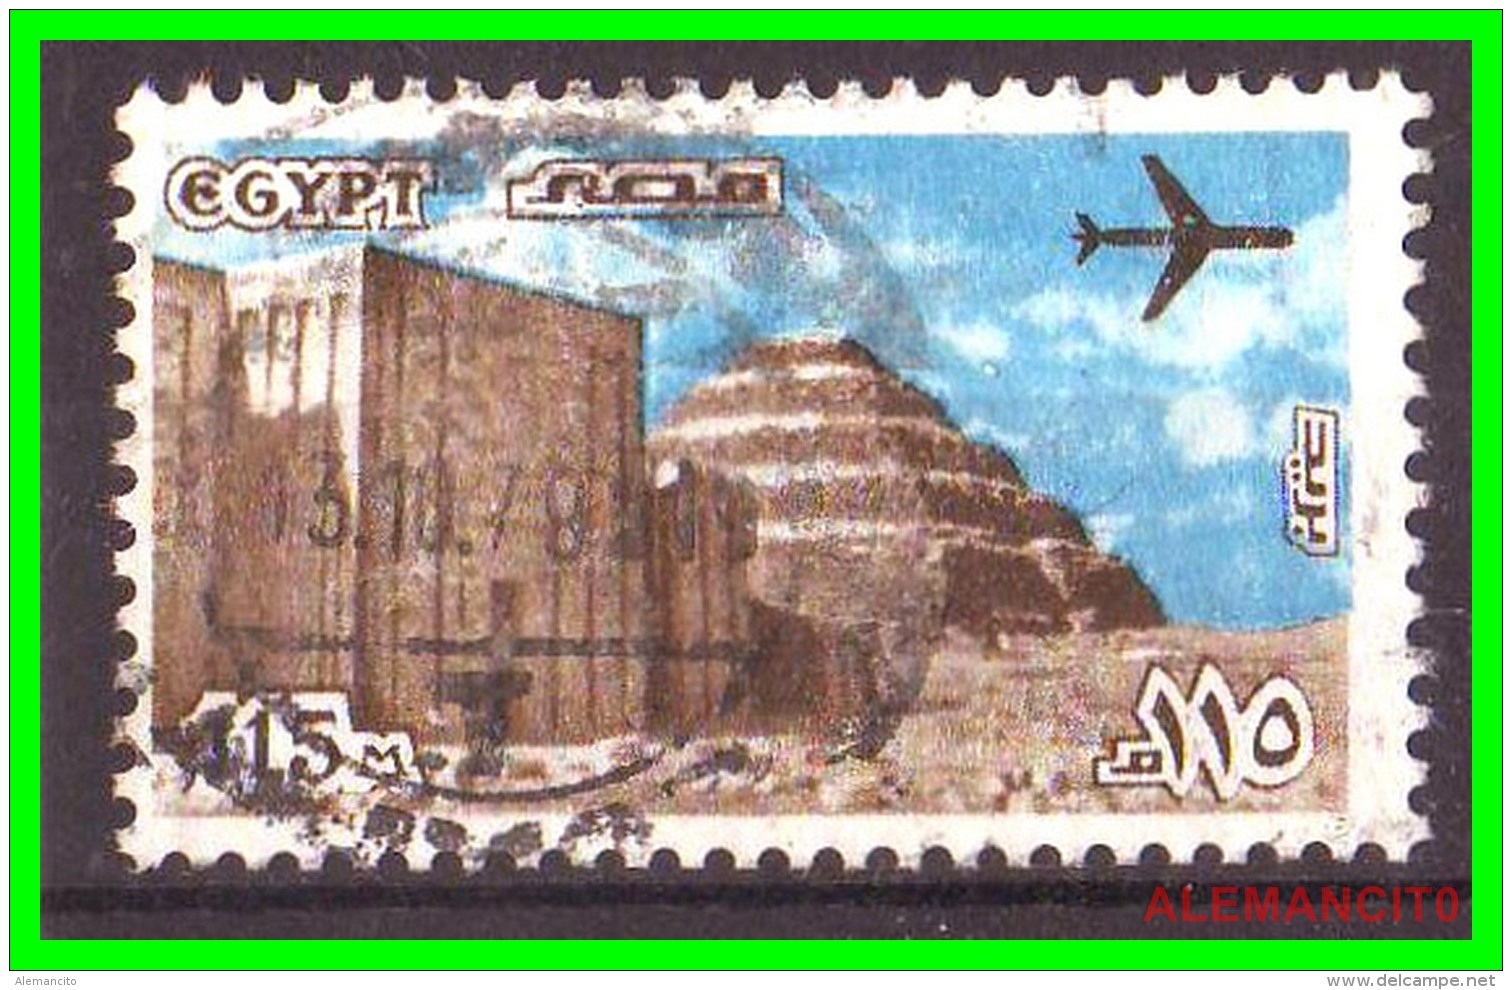 EGYPTO - EGYPT  -   SELLO AÑO 1978 -  Pyramid, Sakhara  And  Entrance  Gate - Used Stamps